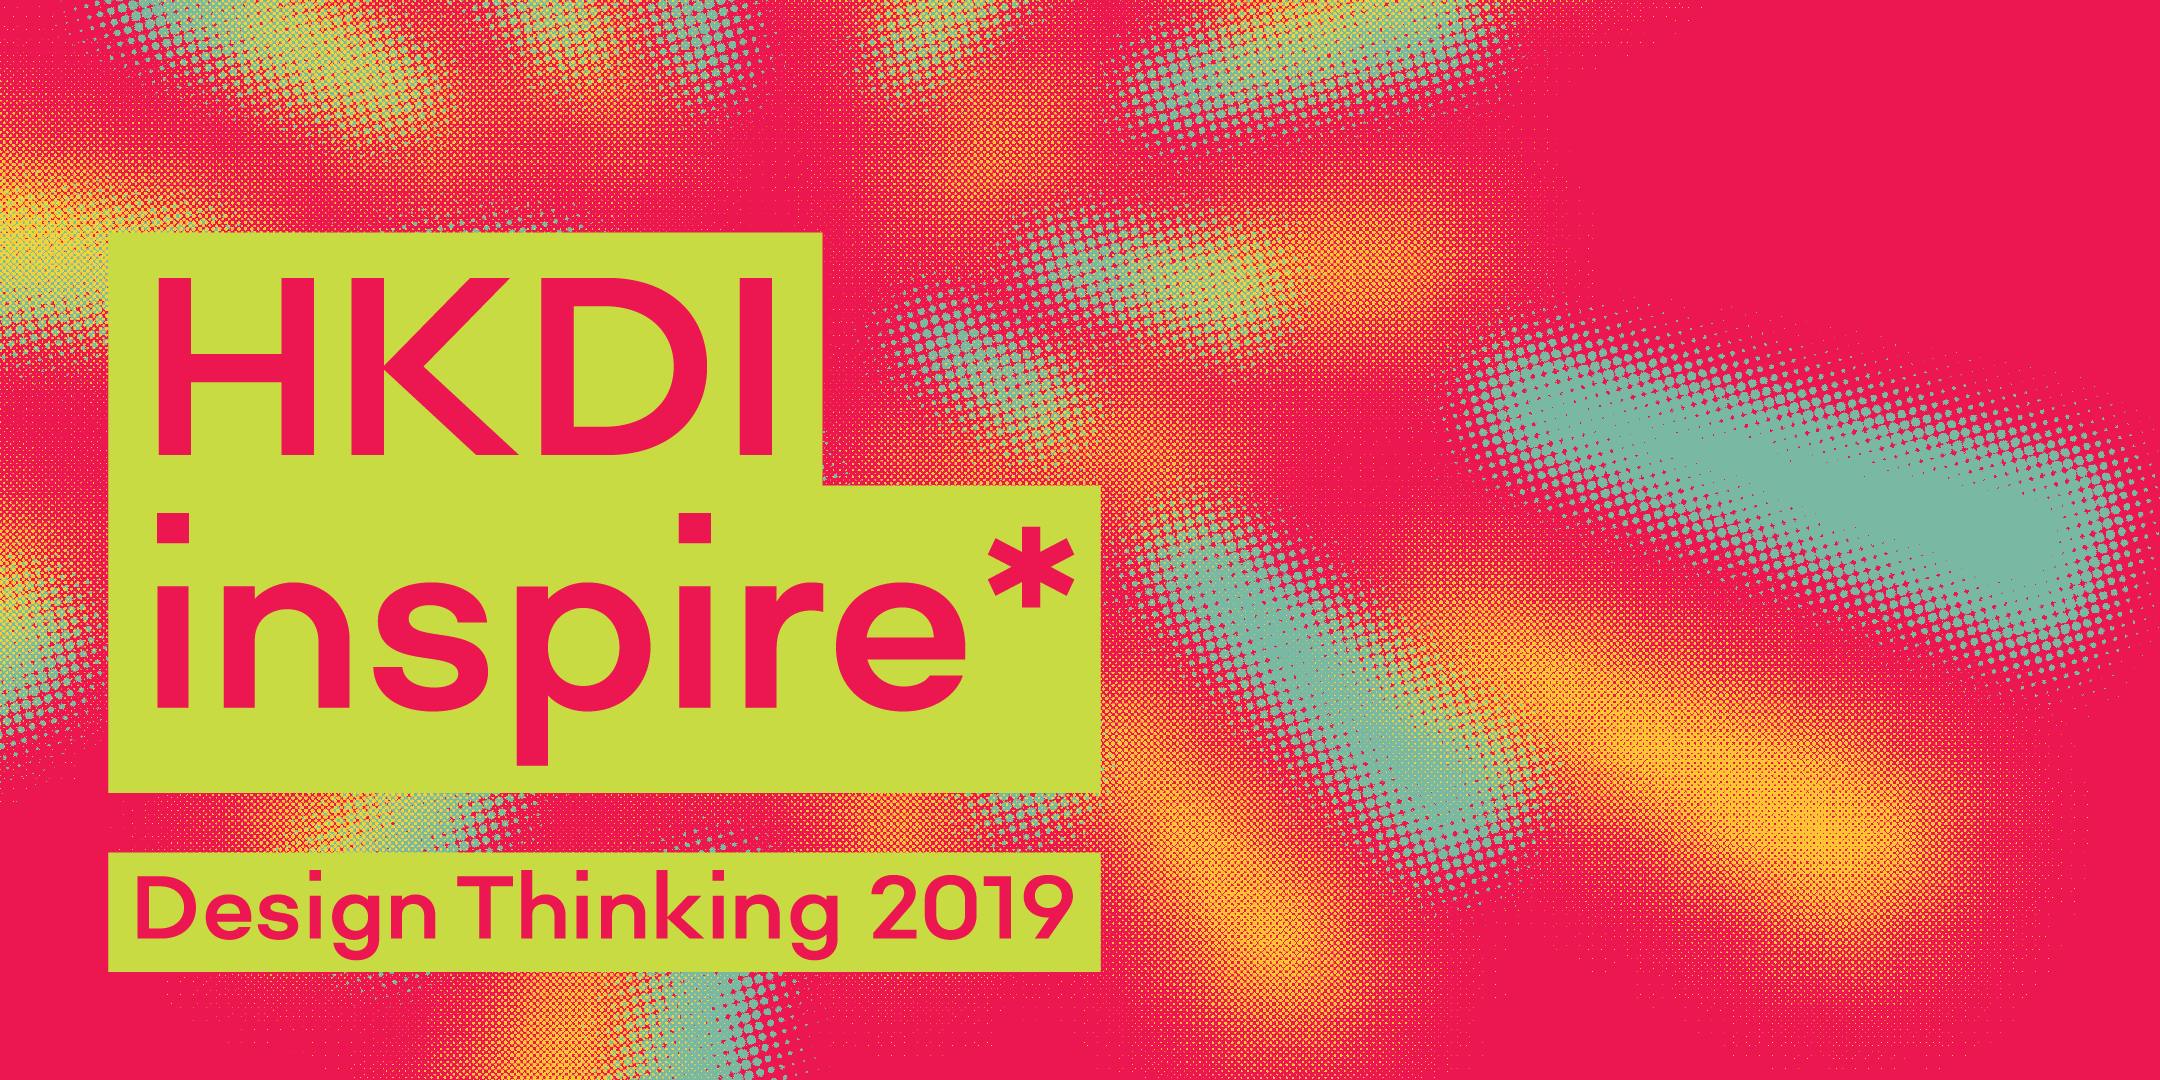 HKDI inspire* Design Thinking 2019 (Workshops)